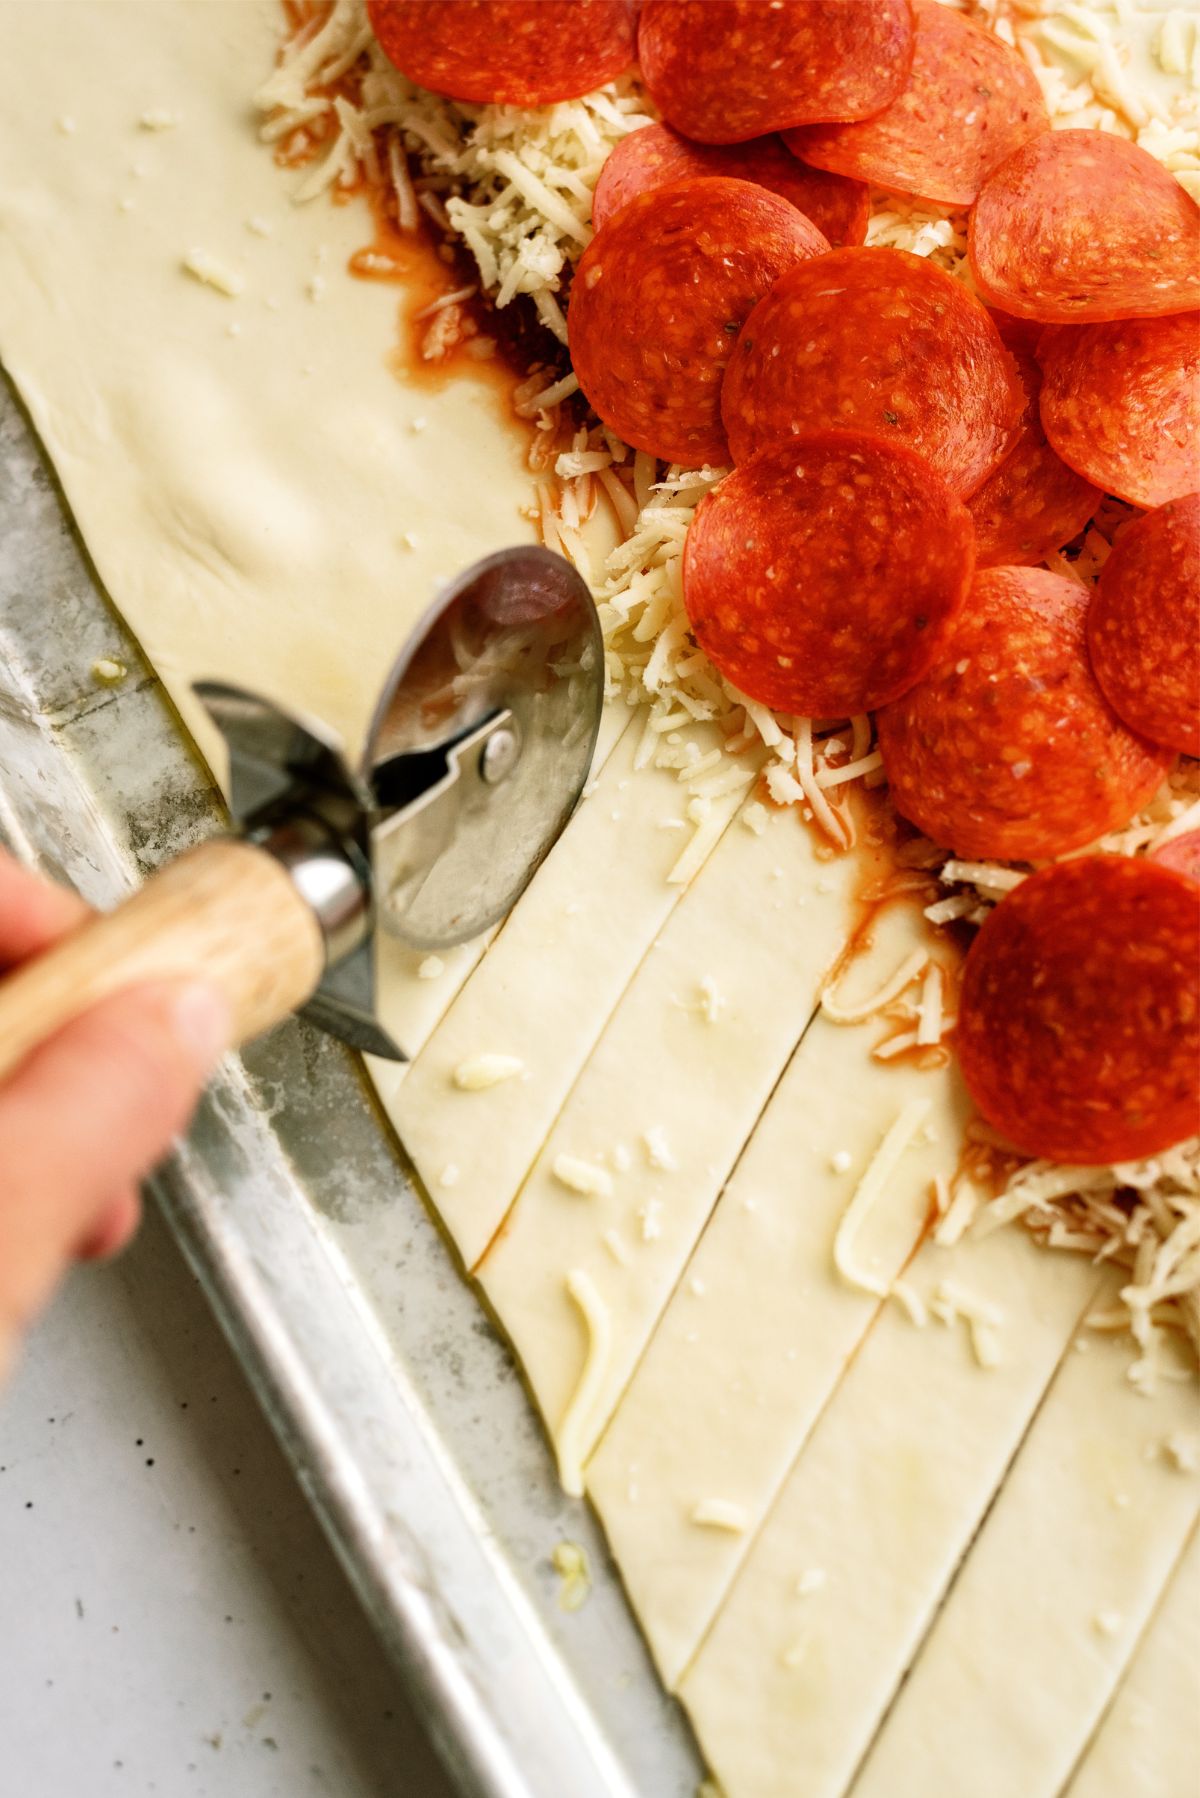 Pizza cutter slicing the pizza dough